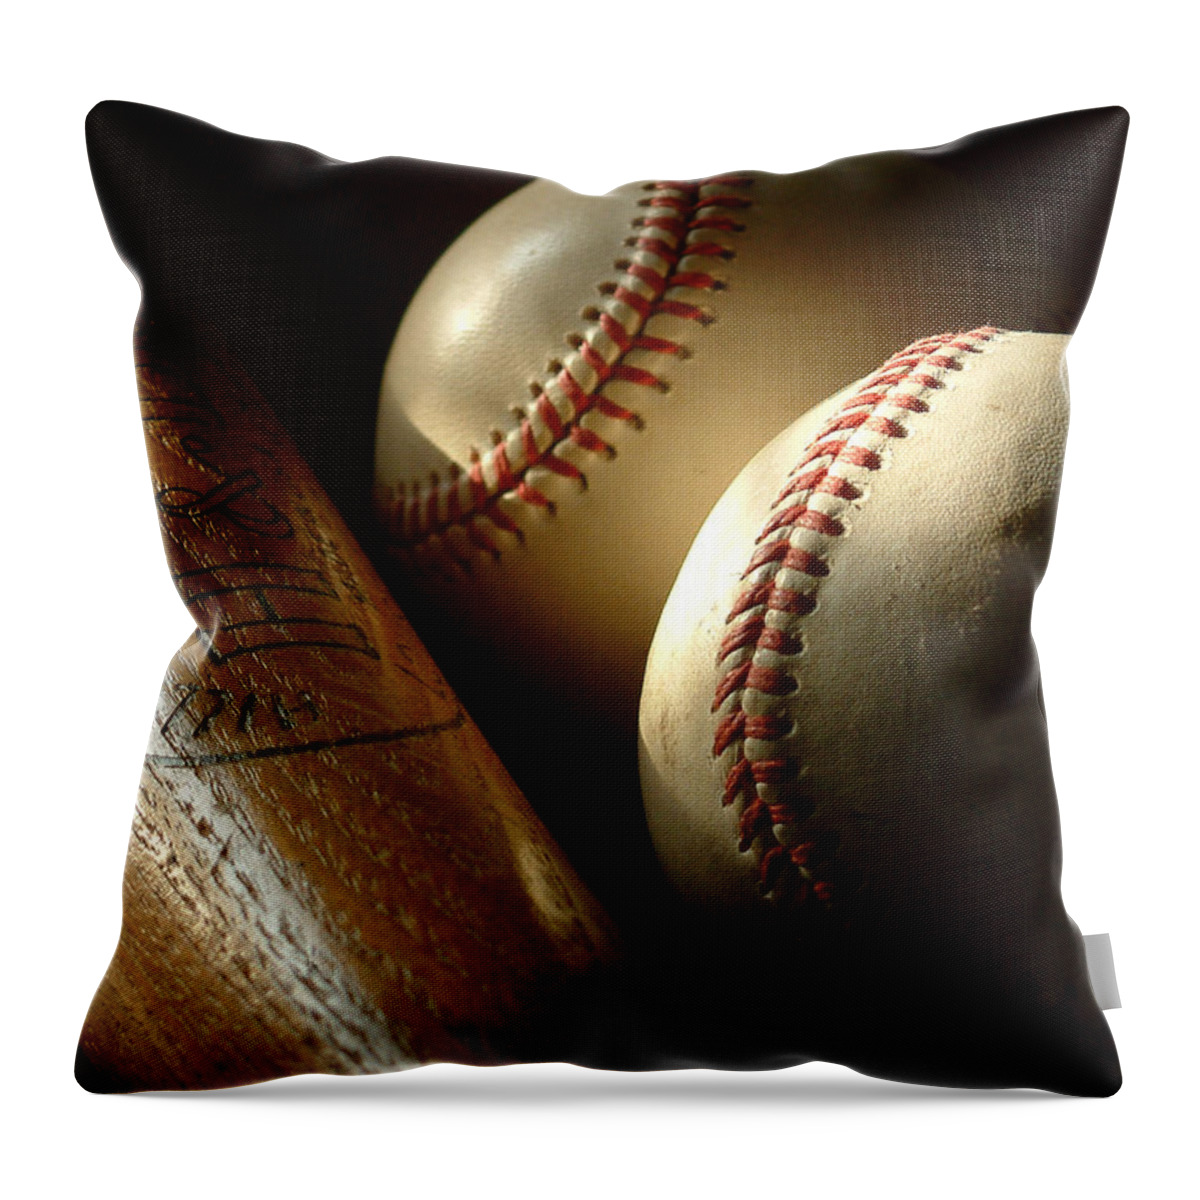 Baseballs Throw Pillow featuring the photograph Boys of Summer by Thomas Pipia